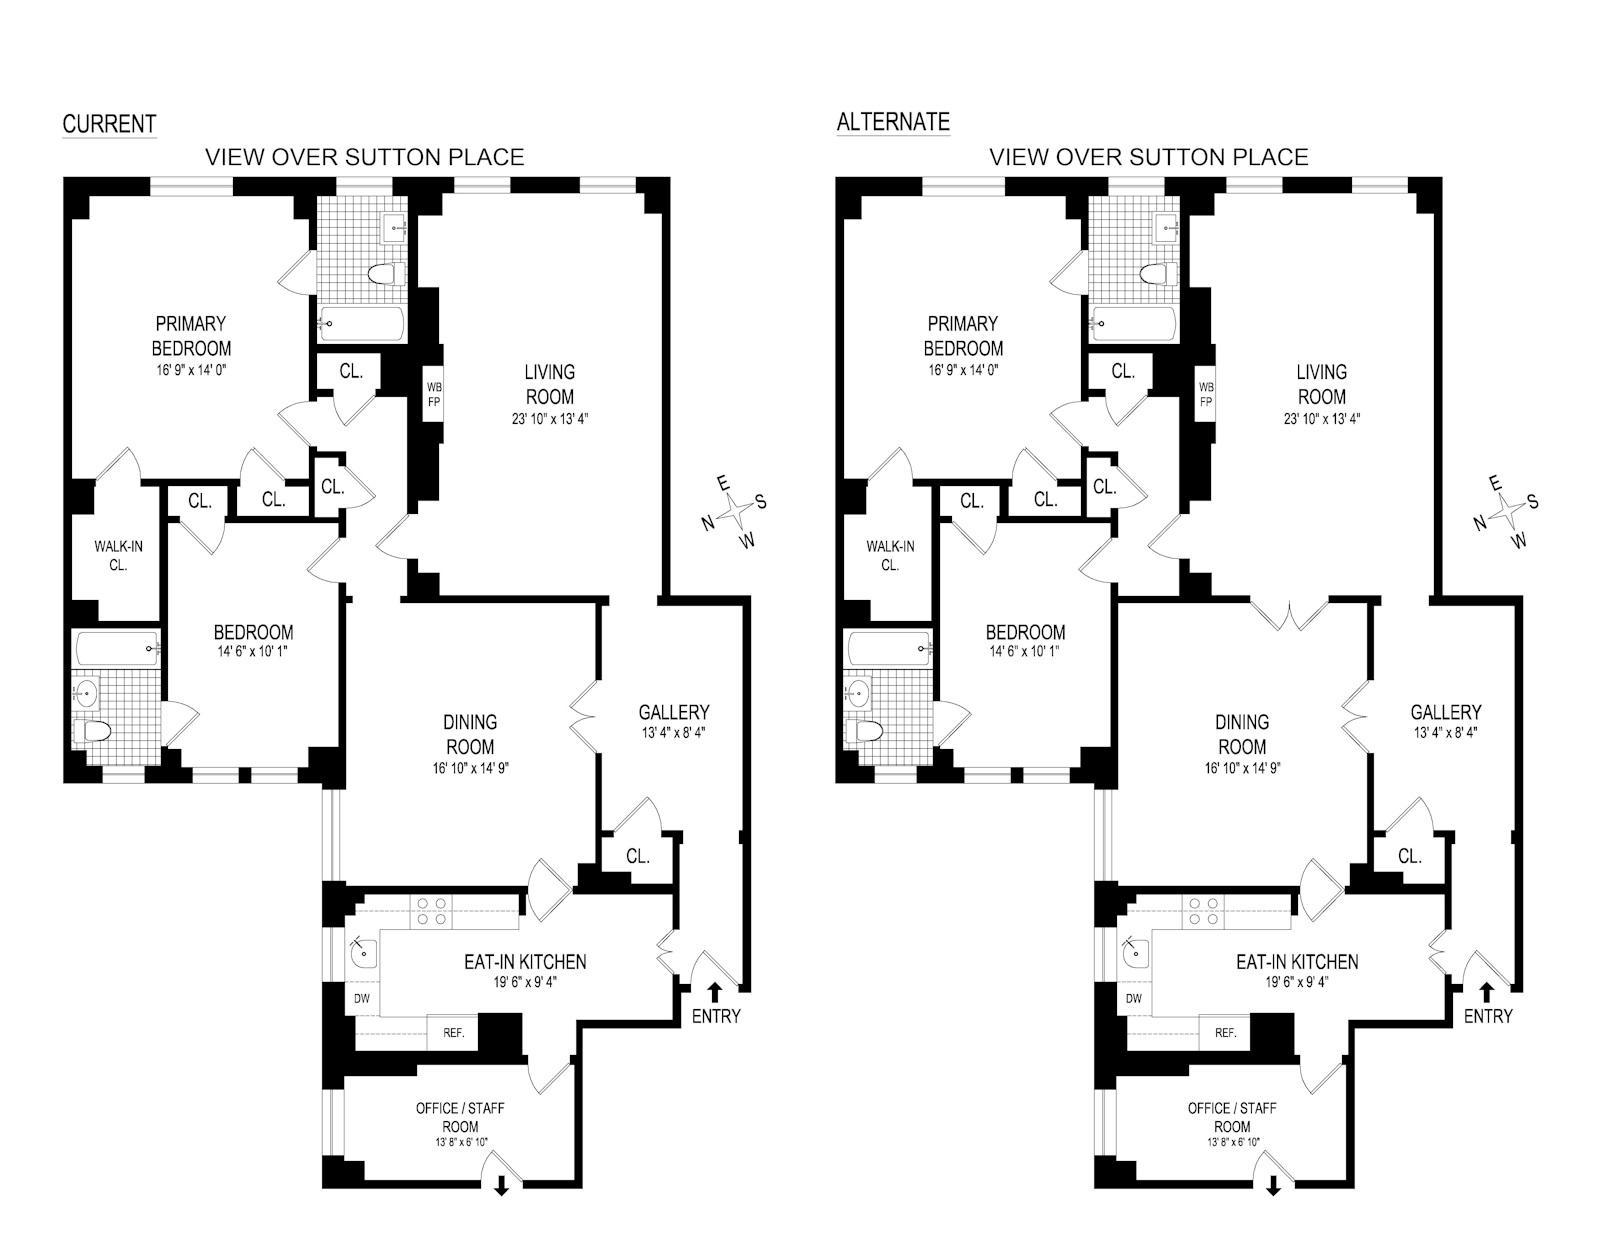 Floorplan for 14 Sutton Place South, 9B